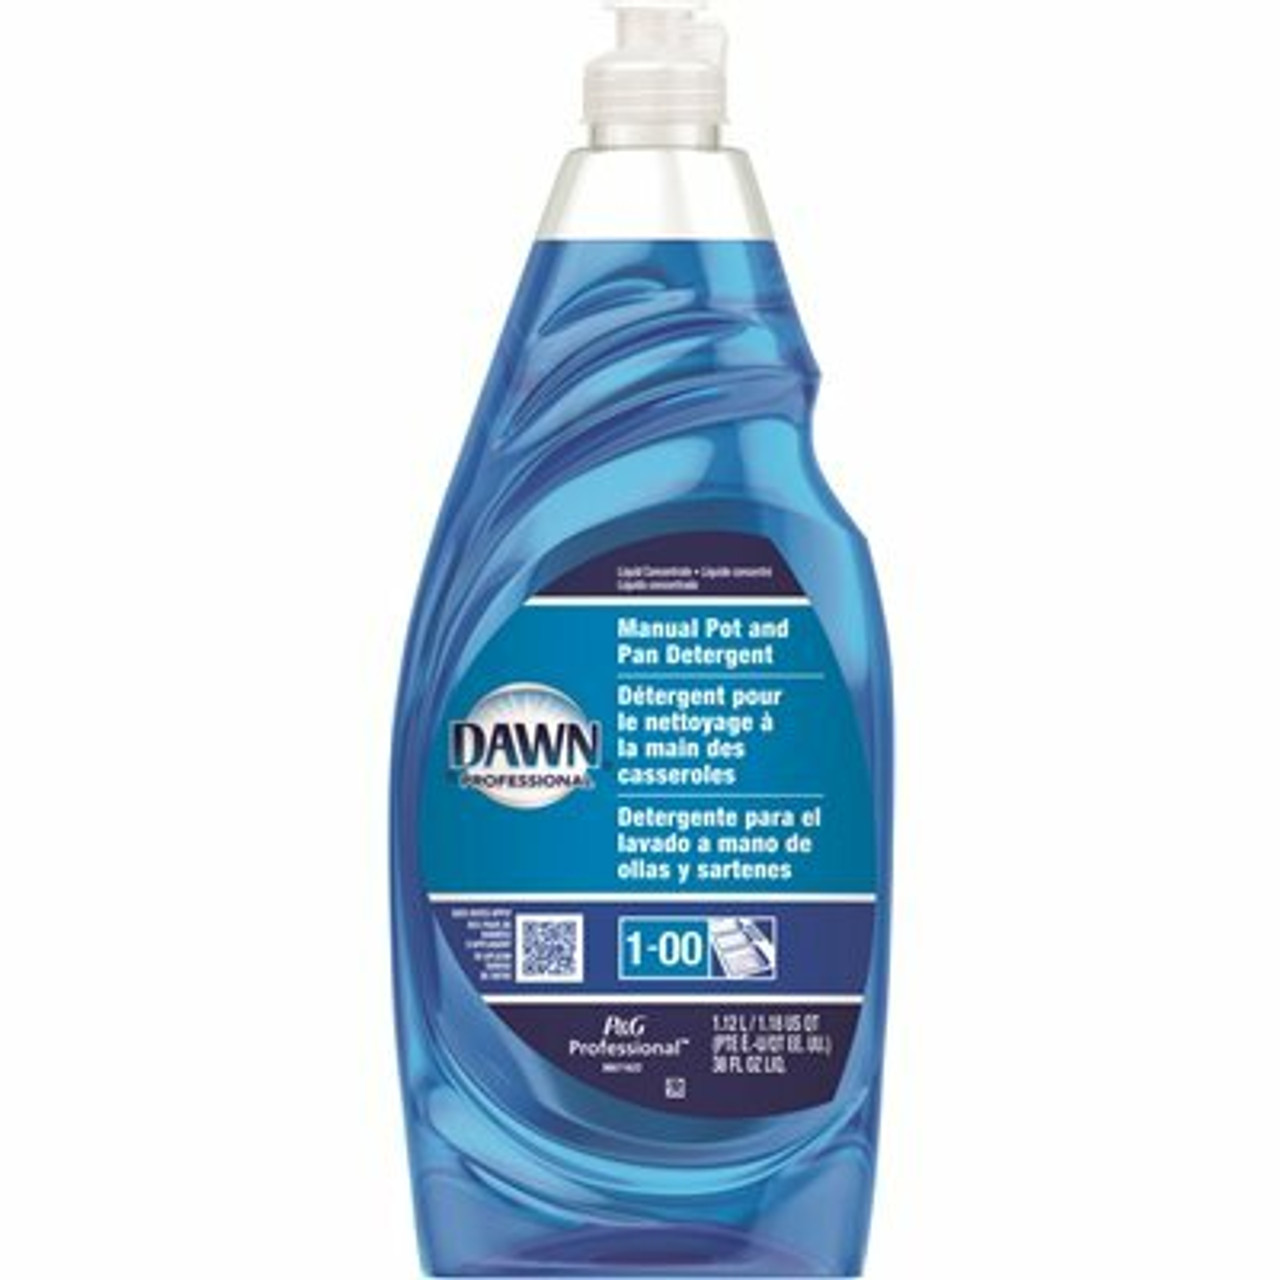 Dawn Professional 38 Oz. Original Scent Dishwashing Liquid (8-Case)